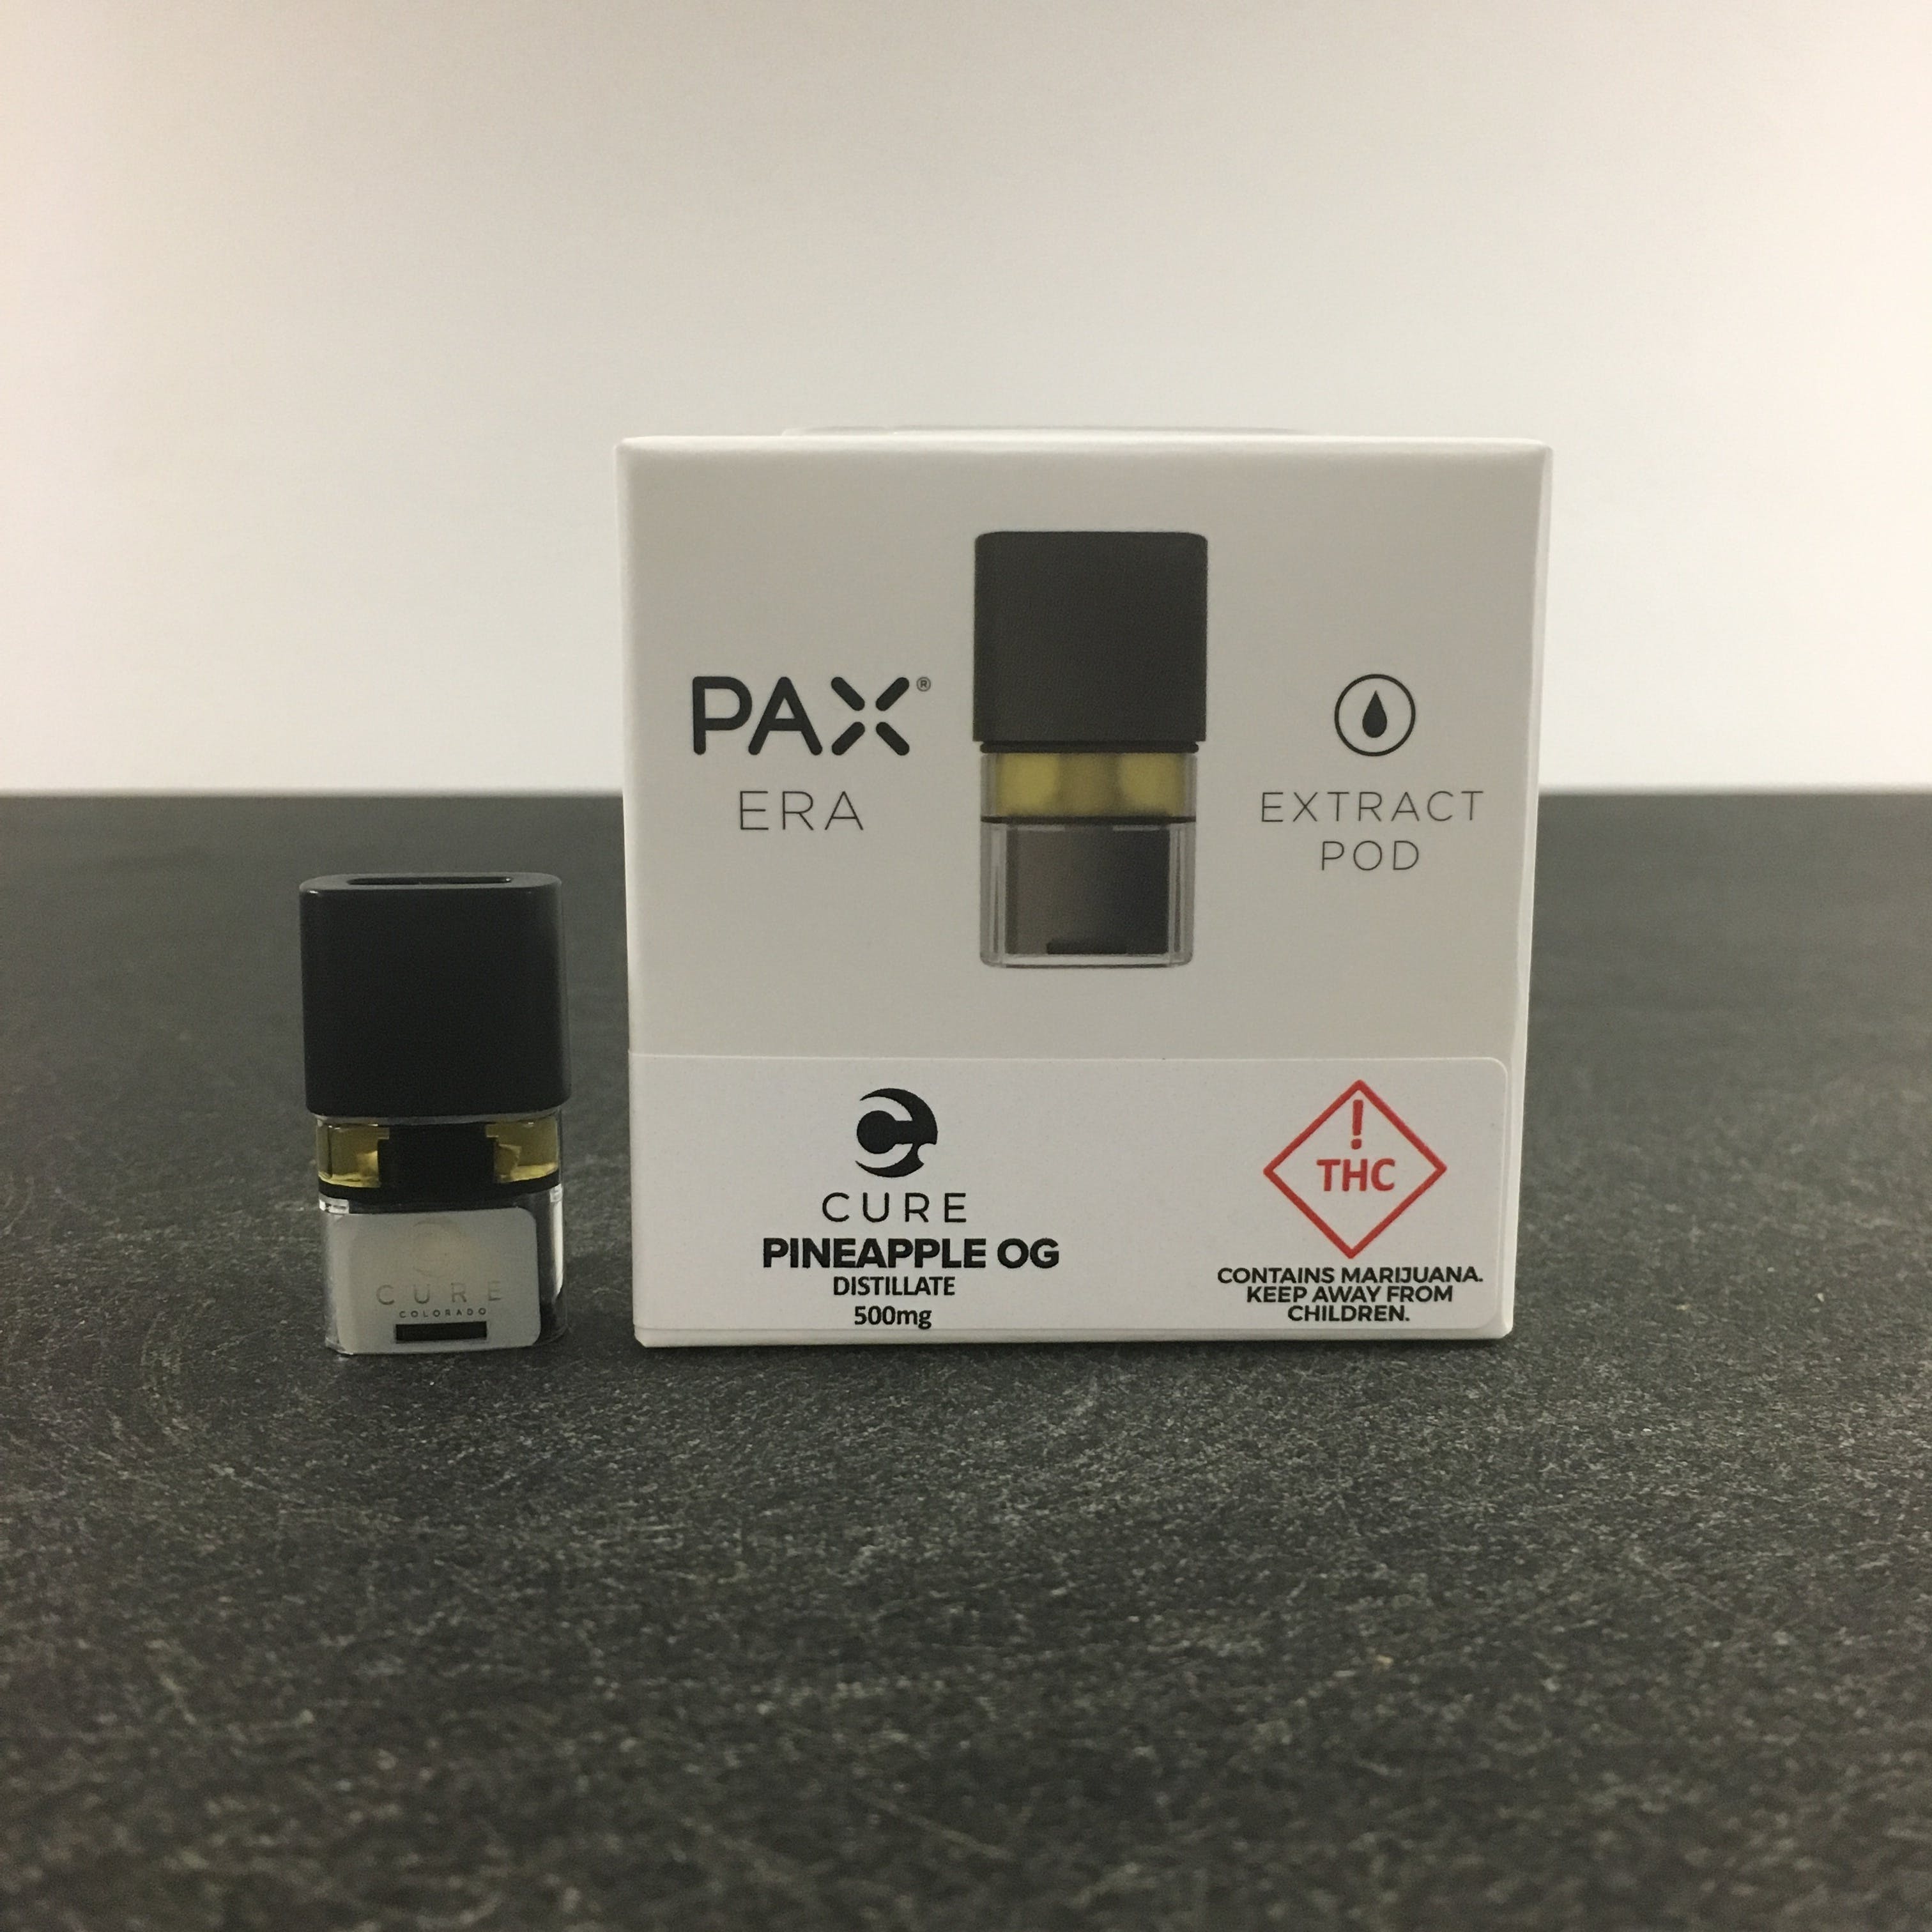 concentrate-pax-era-pod-2c-distillate-2c-pineapple-og-500mg